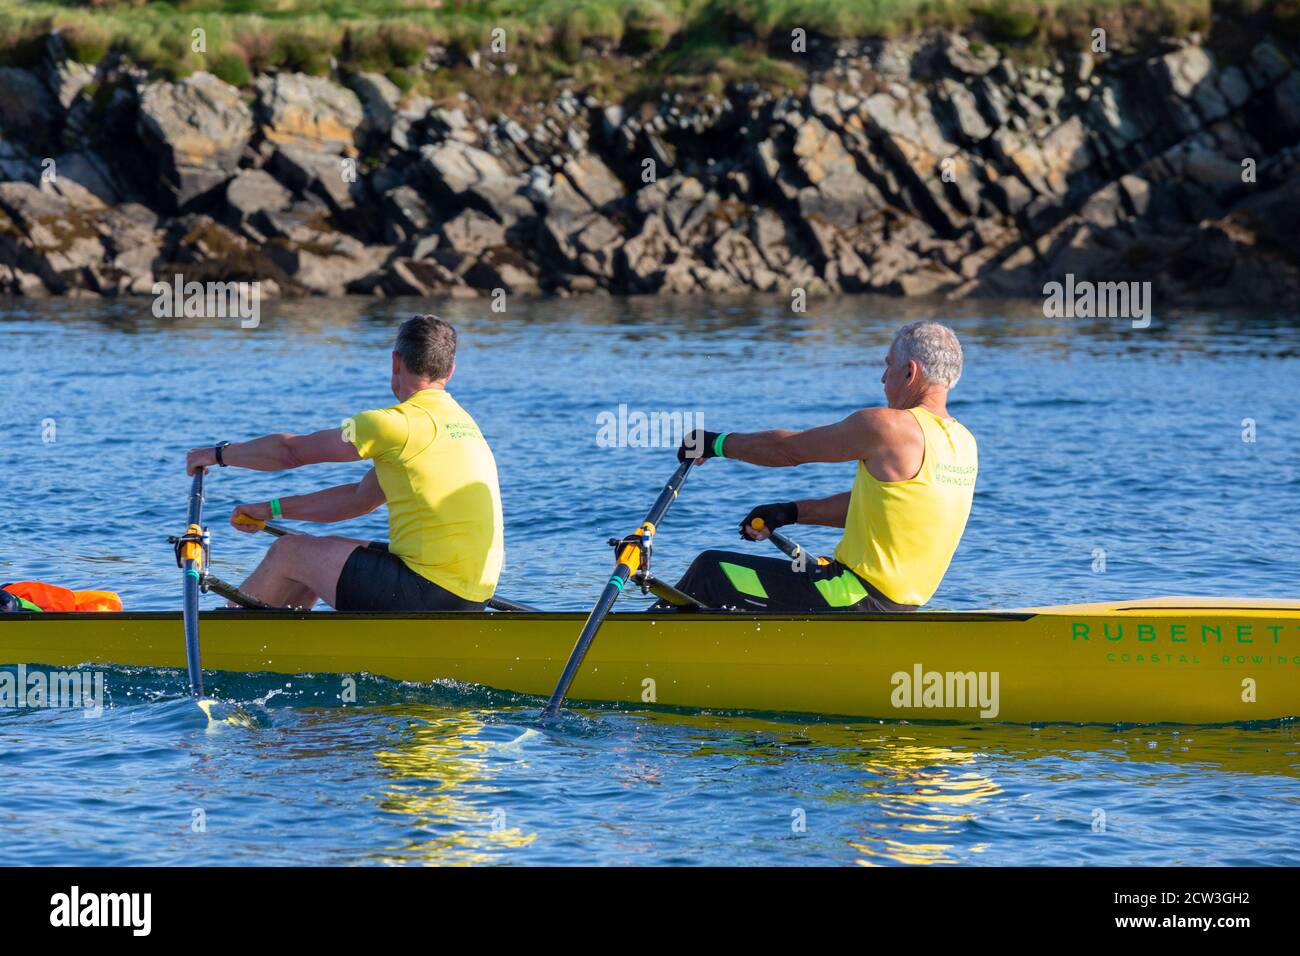 Irish Offshore Rowing Championships, Portmagee, County Kerry, Irlanda, settembre 2020 Foto Stock